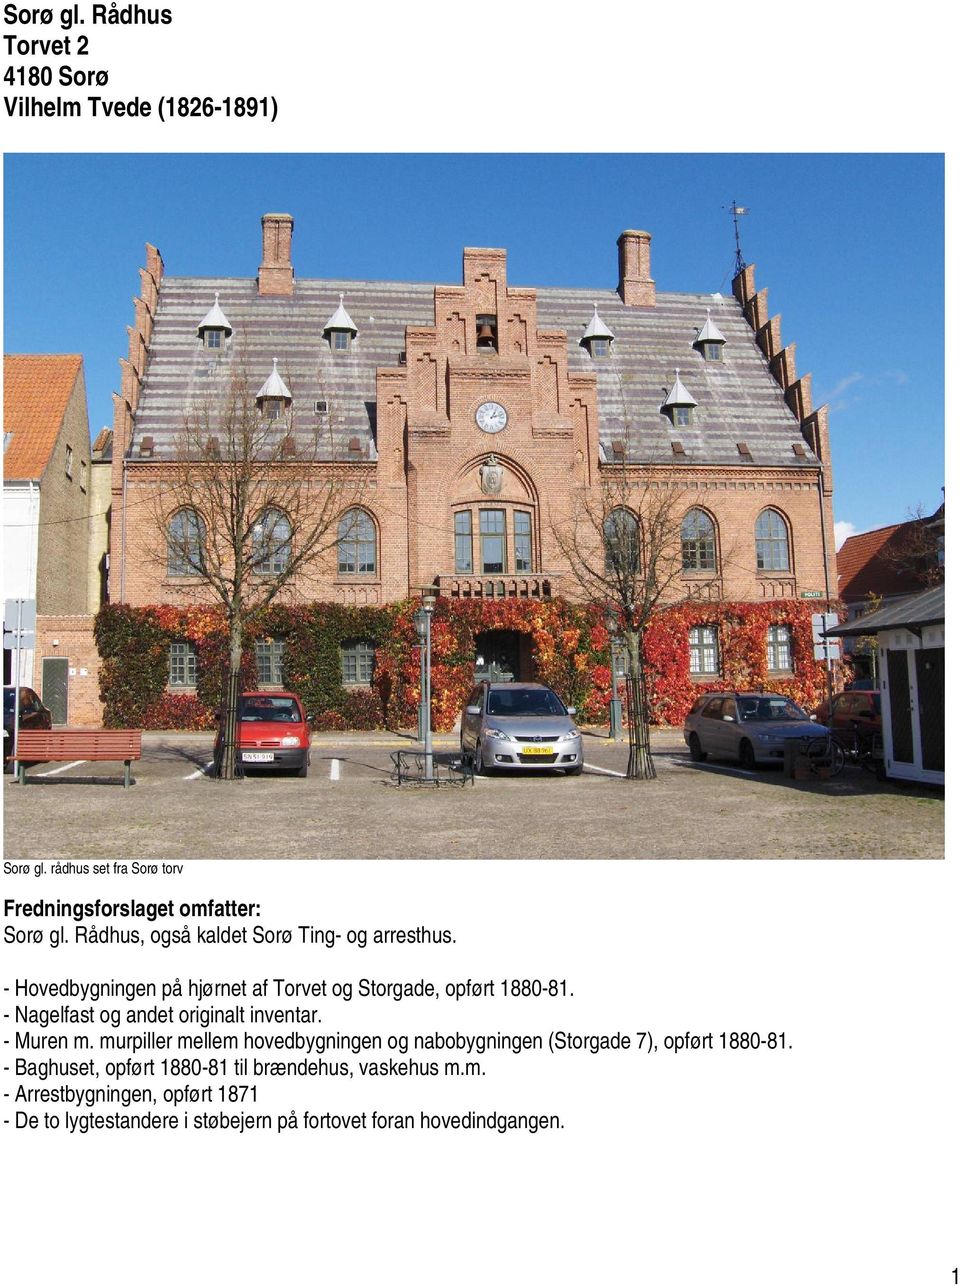 - Nagelfast og andet originalt inventar. - Muren m. murpiller mellem hovedbygningen og nabobygningen (Storgade 7), opført 1880-81.